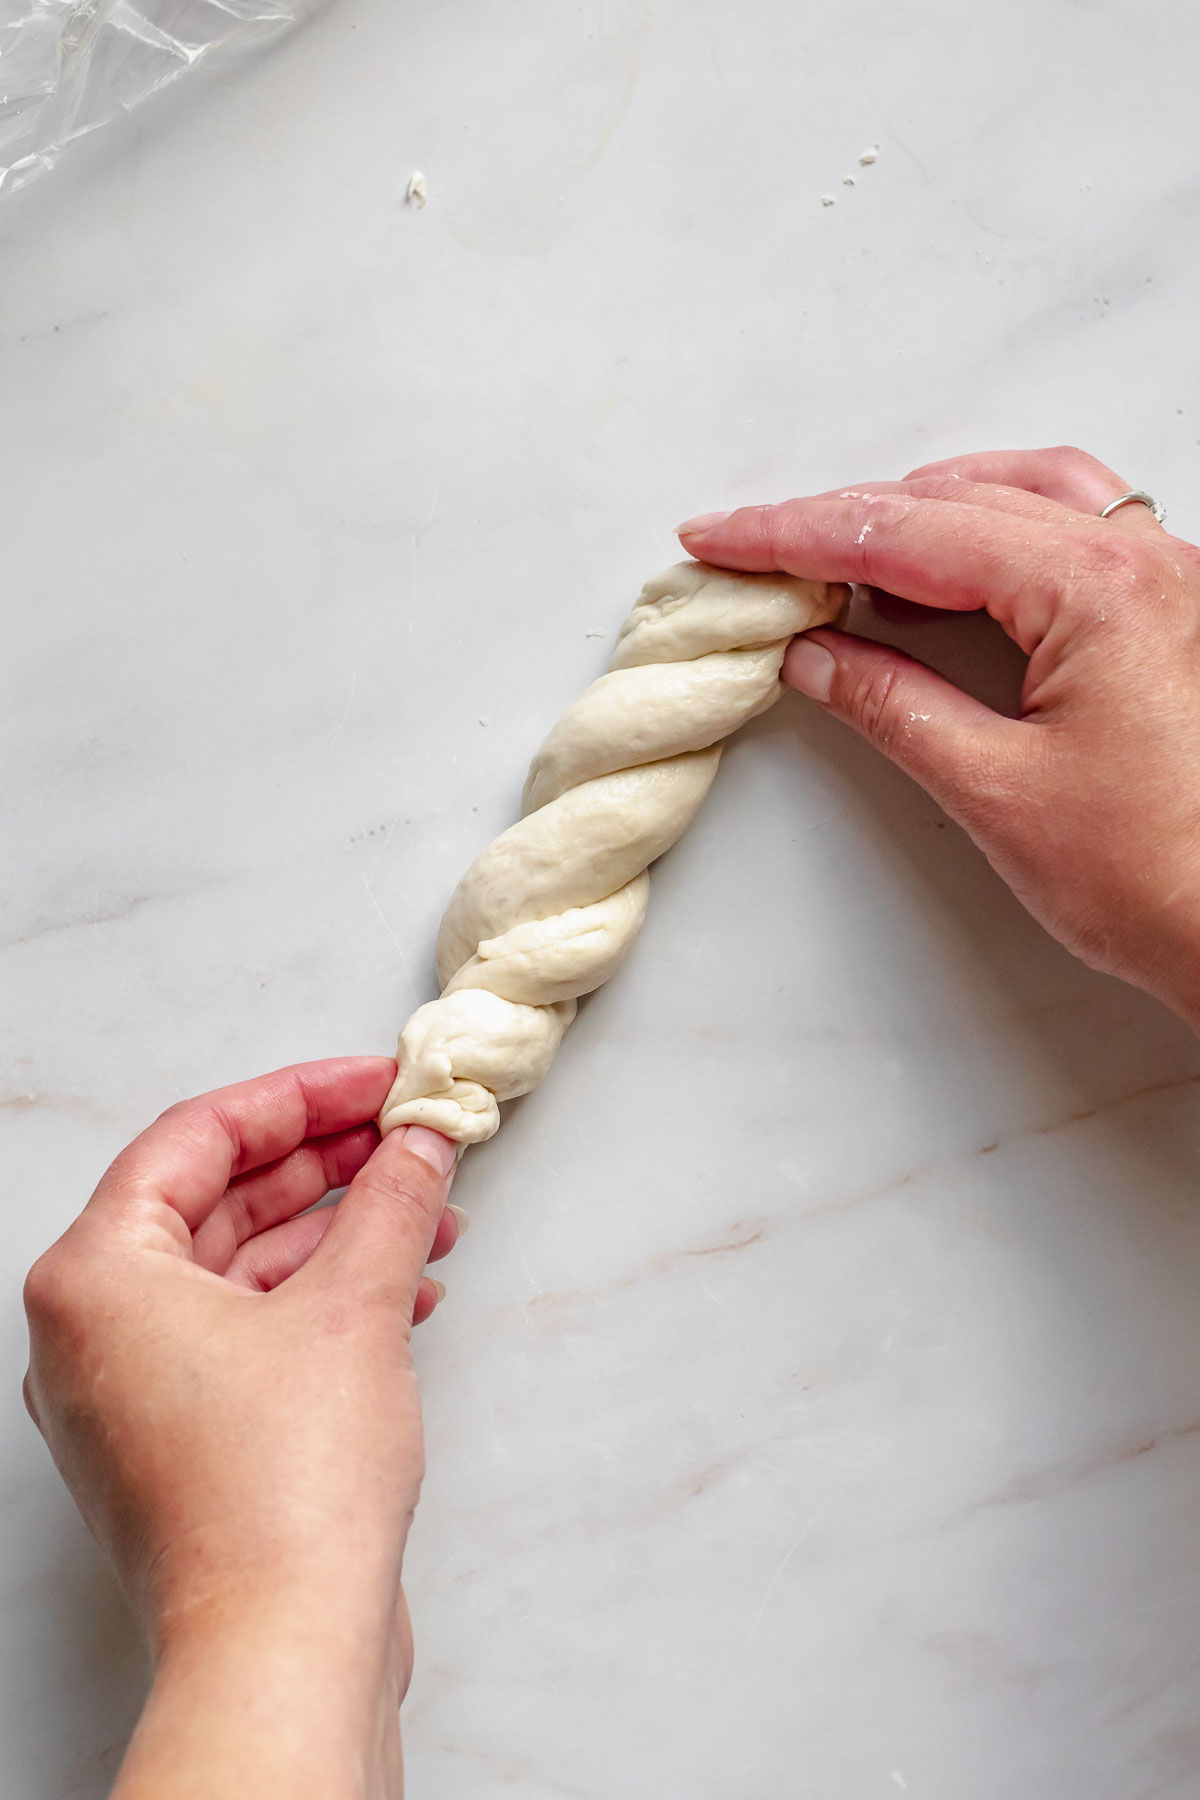 Twisting pretzel dough with two hands.